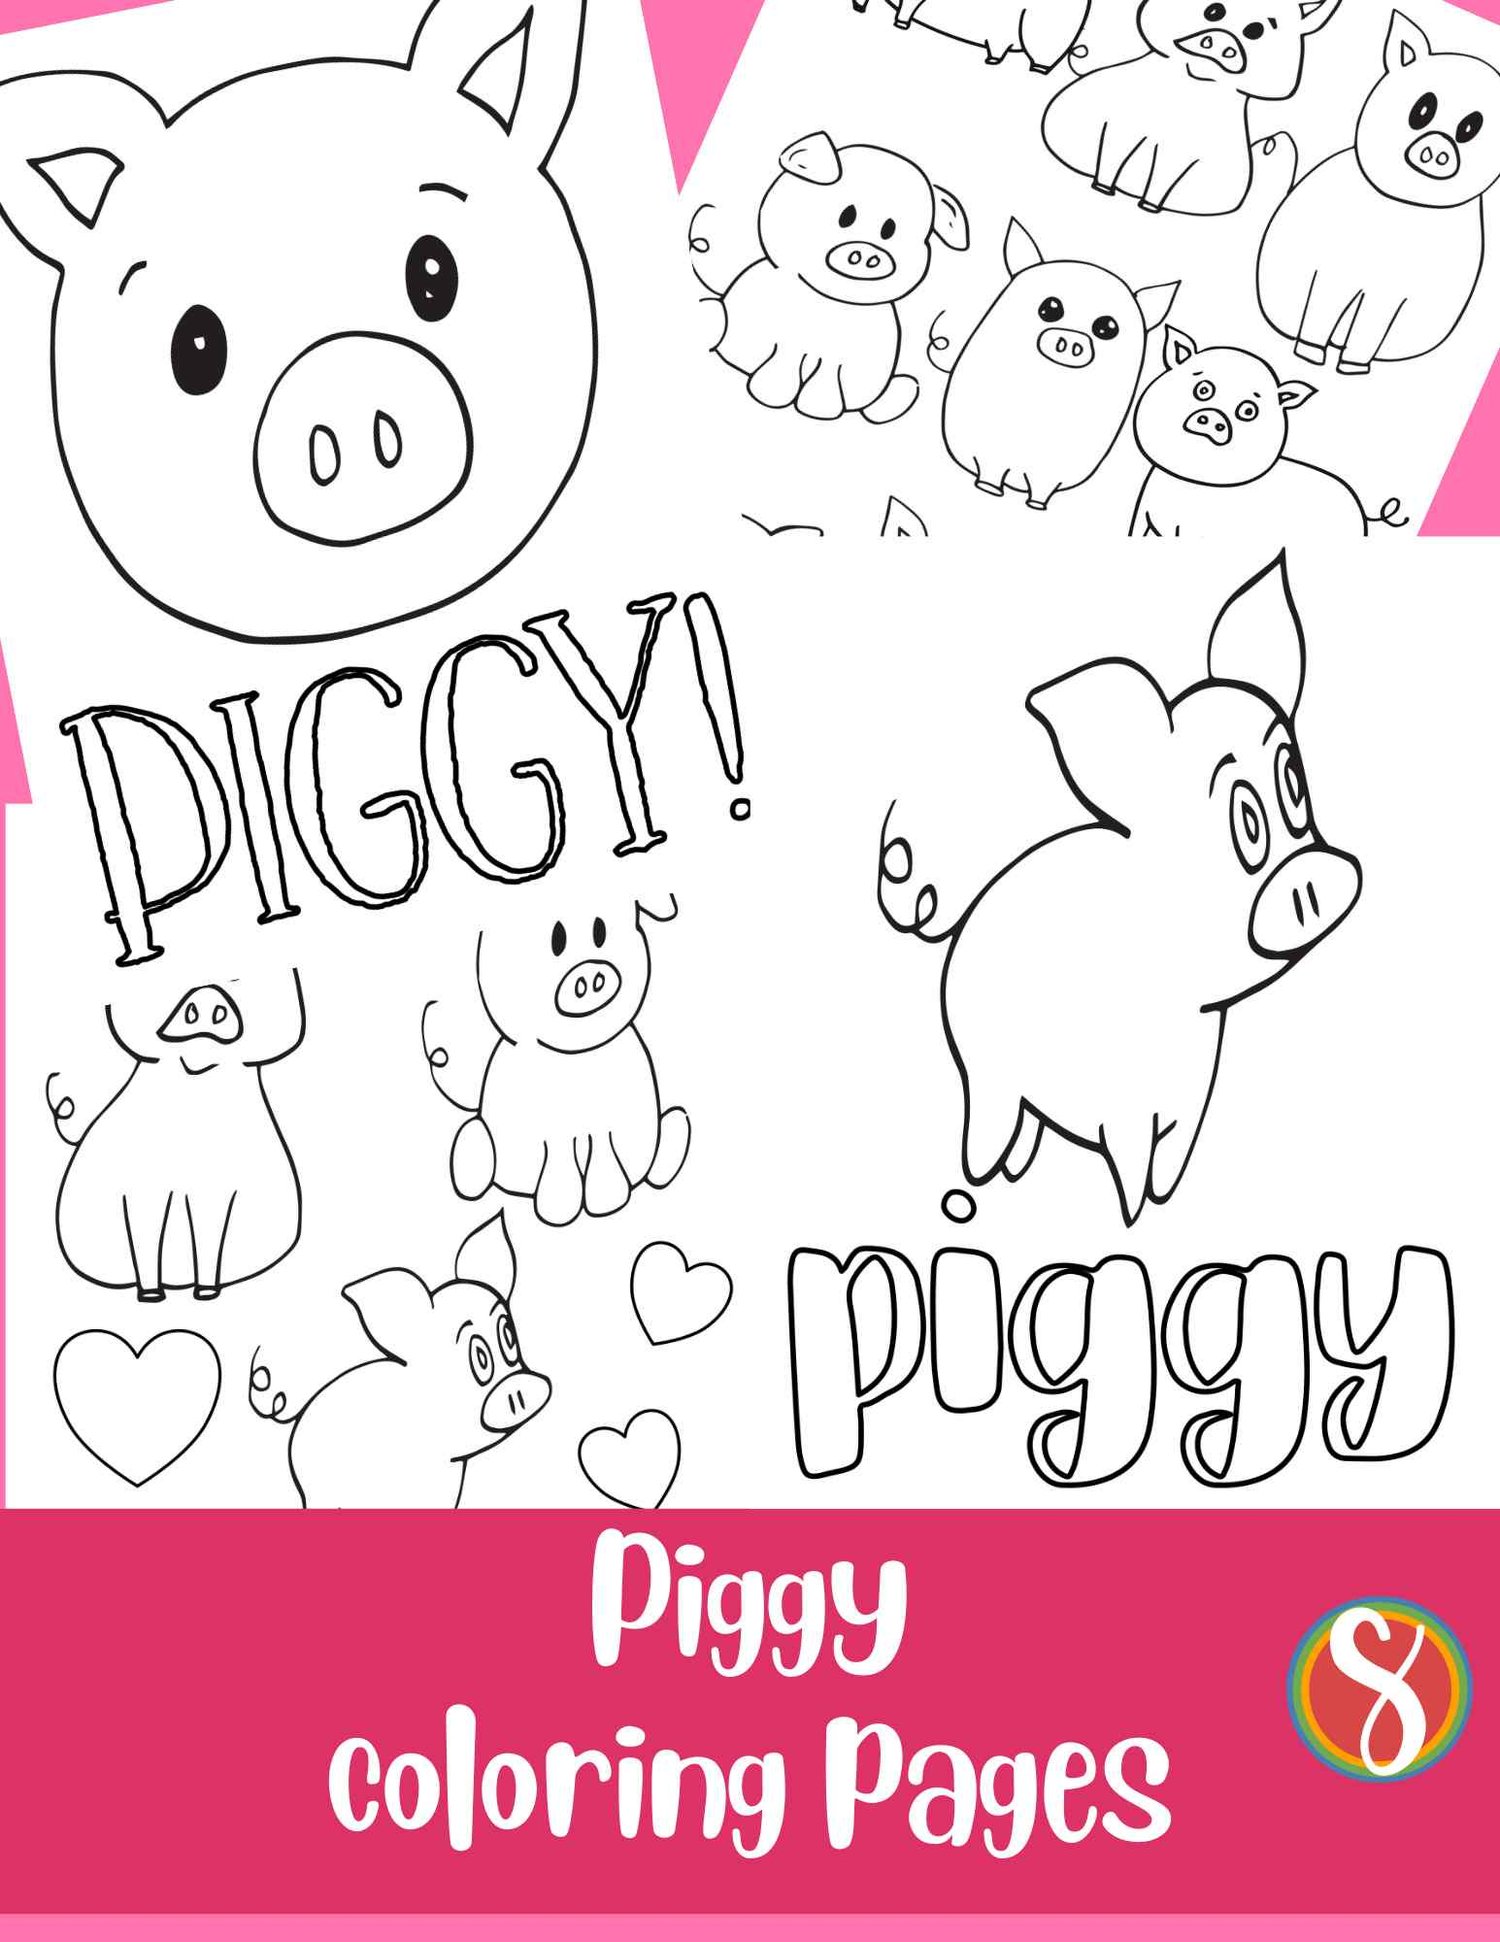 Free pig coloring pages â stevie doodles